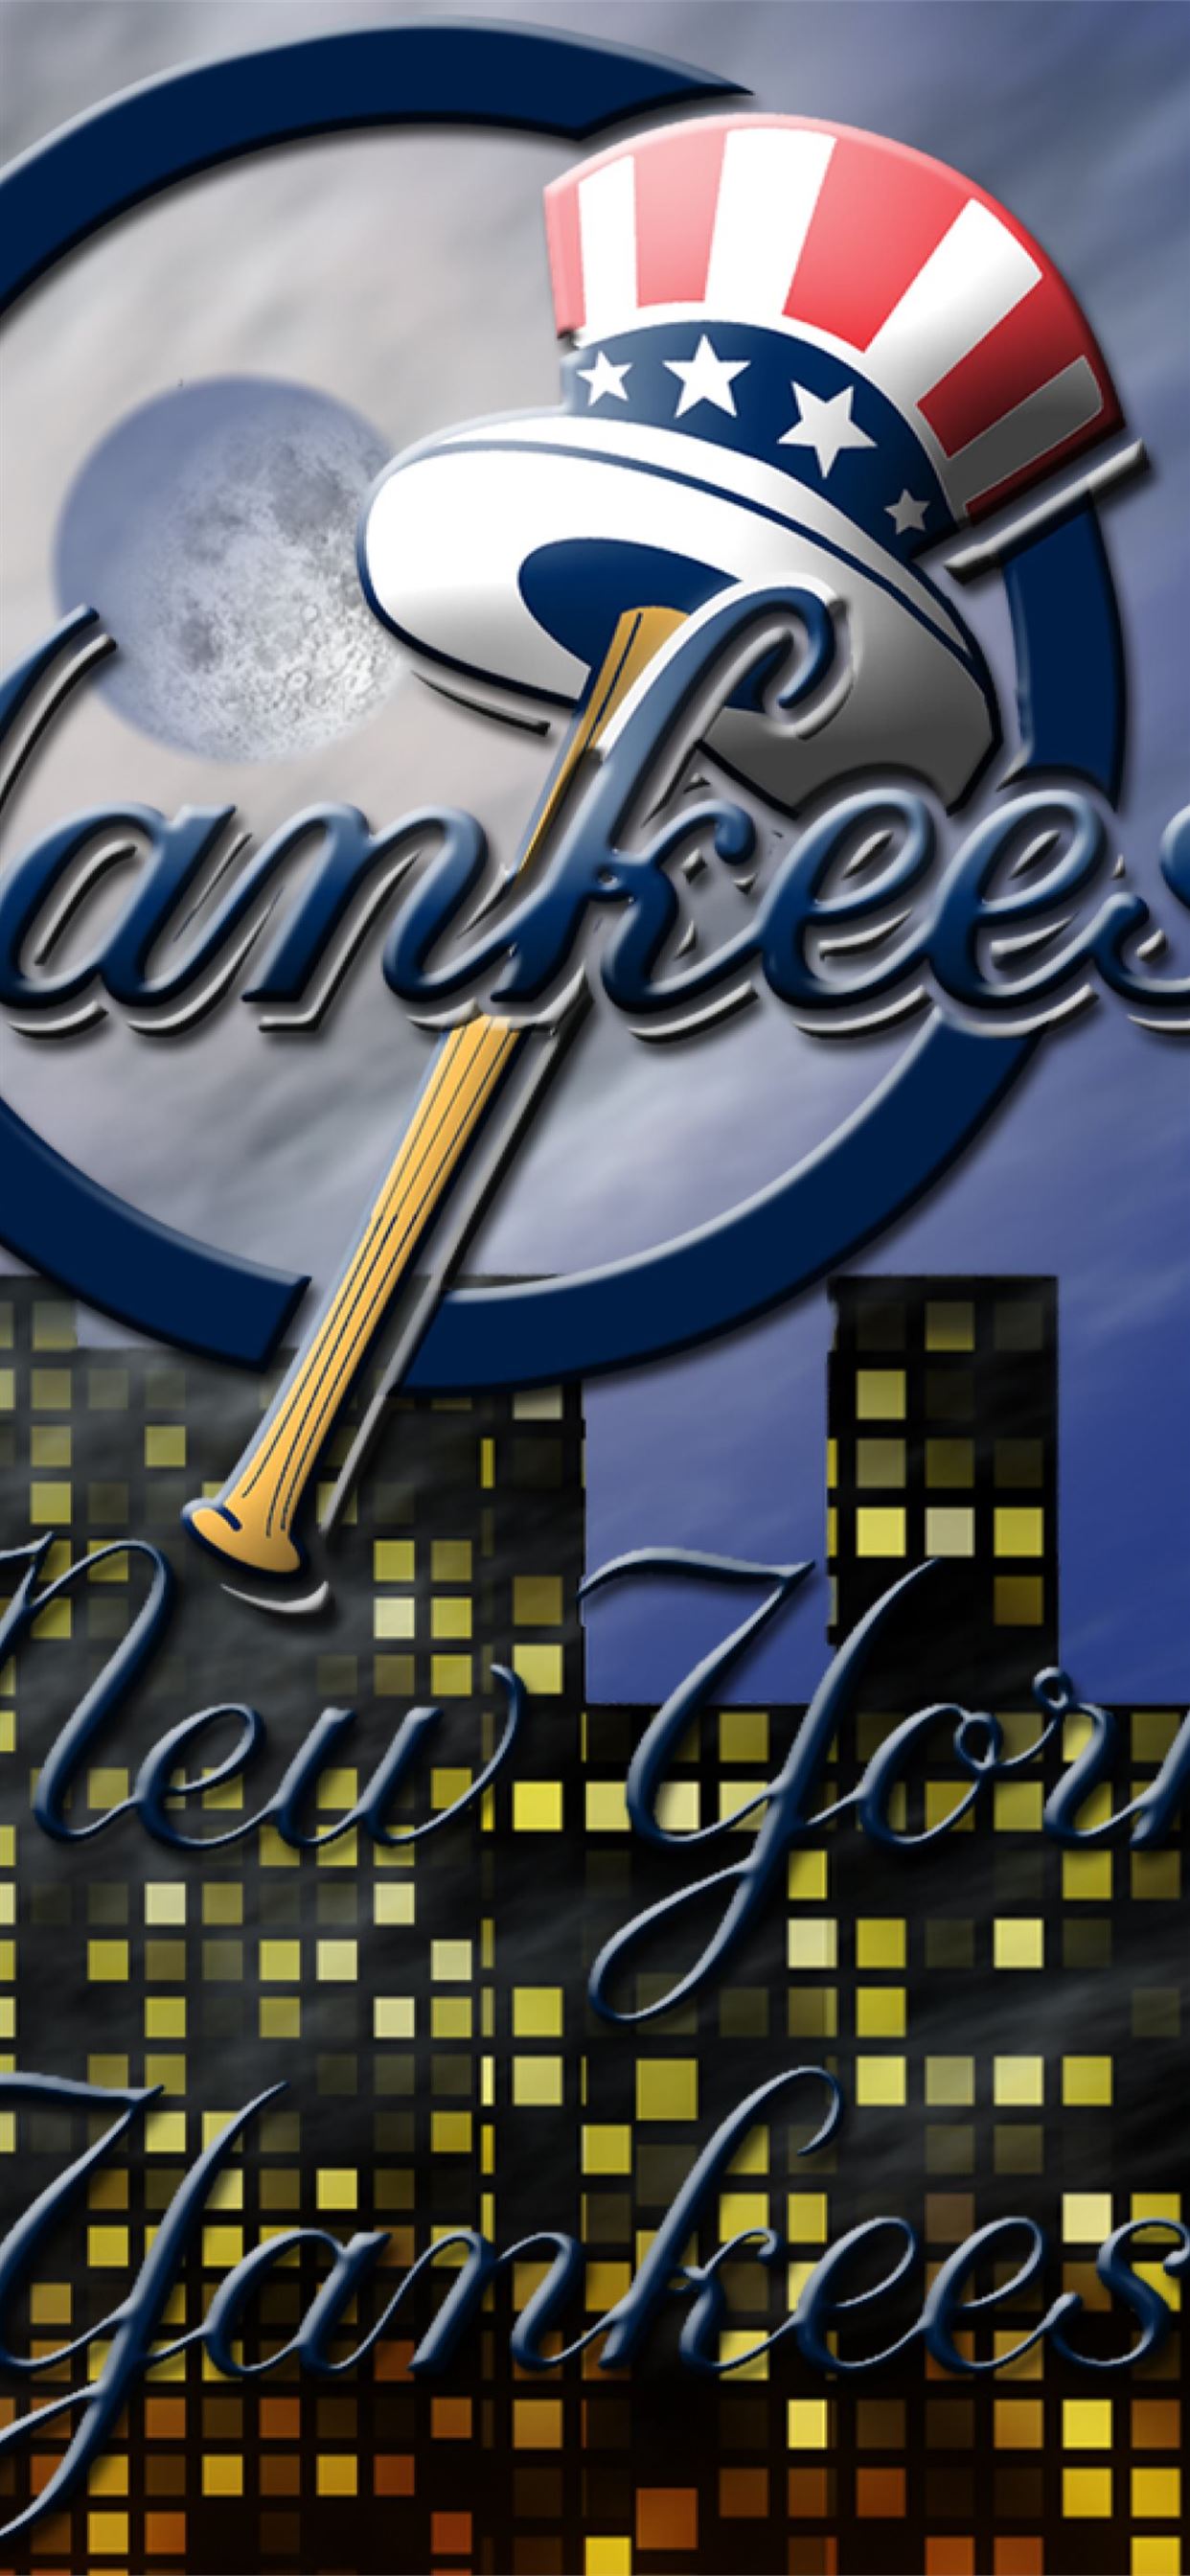 Wallpaper Background New York Yankees